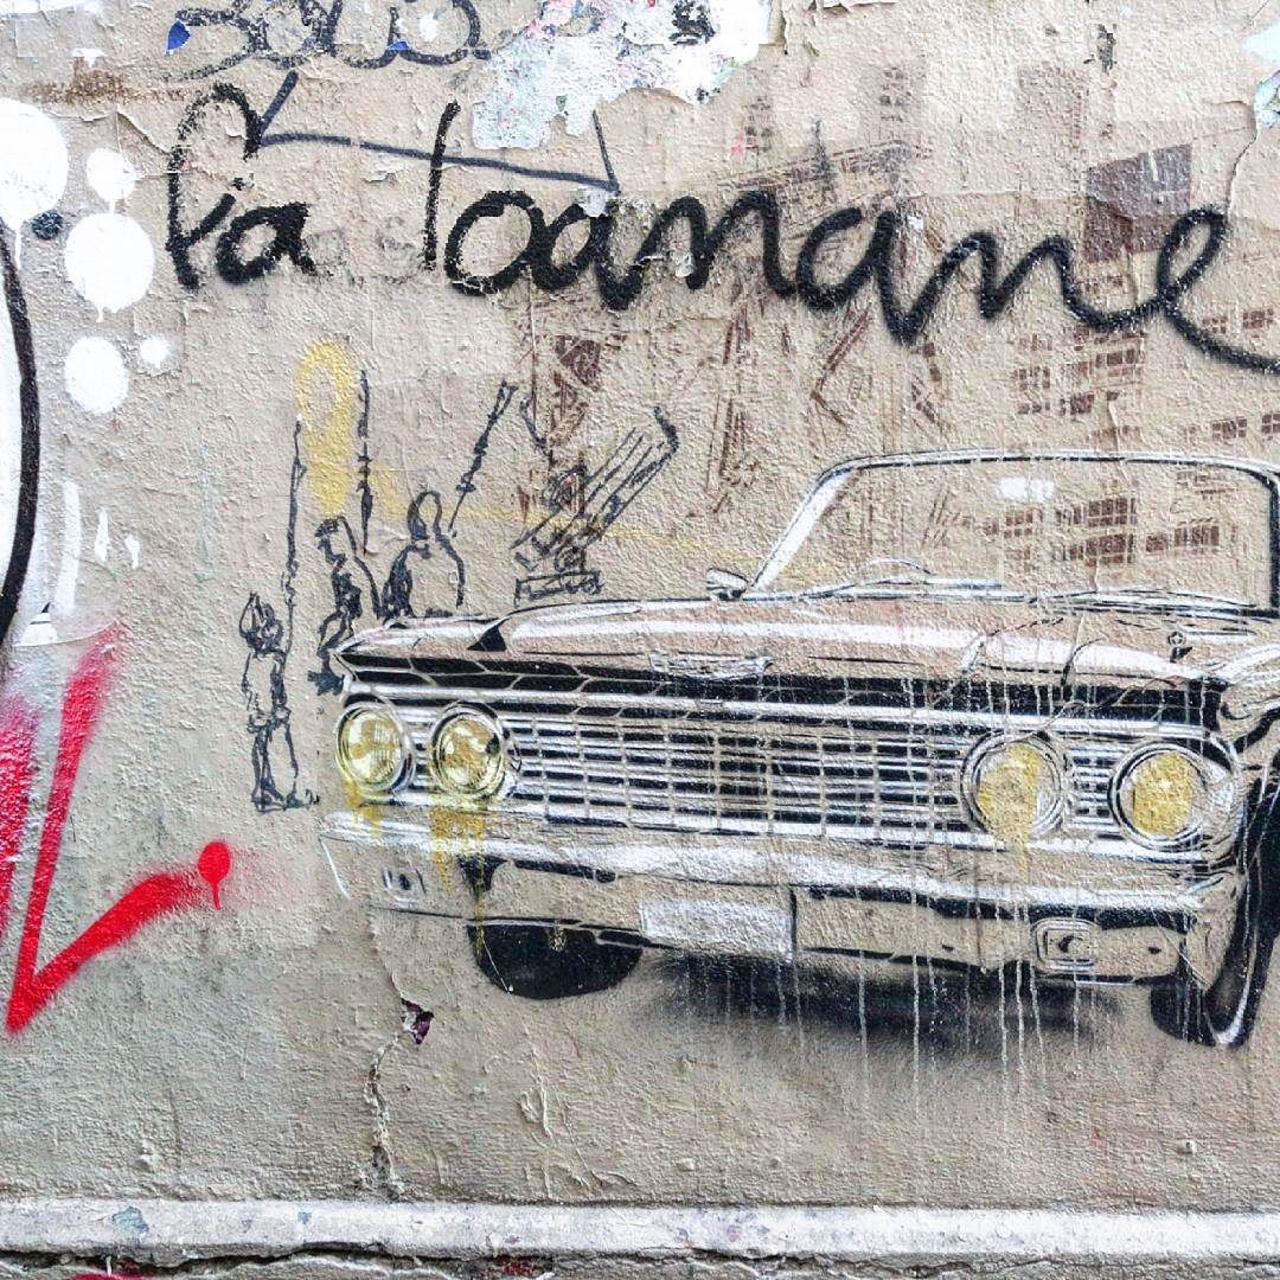 #Paris #graffiti photo by @jpoesse http://ift.tt/1LSSKk8 #StreetArt http://t.co/W06LJCk5cv